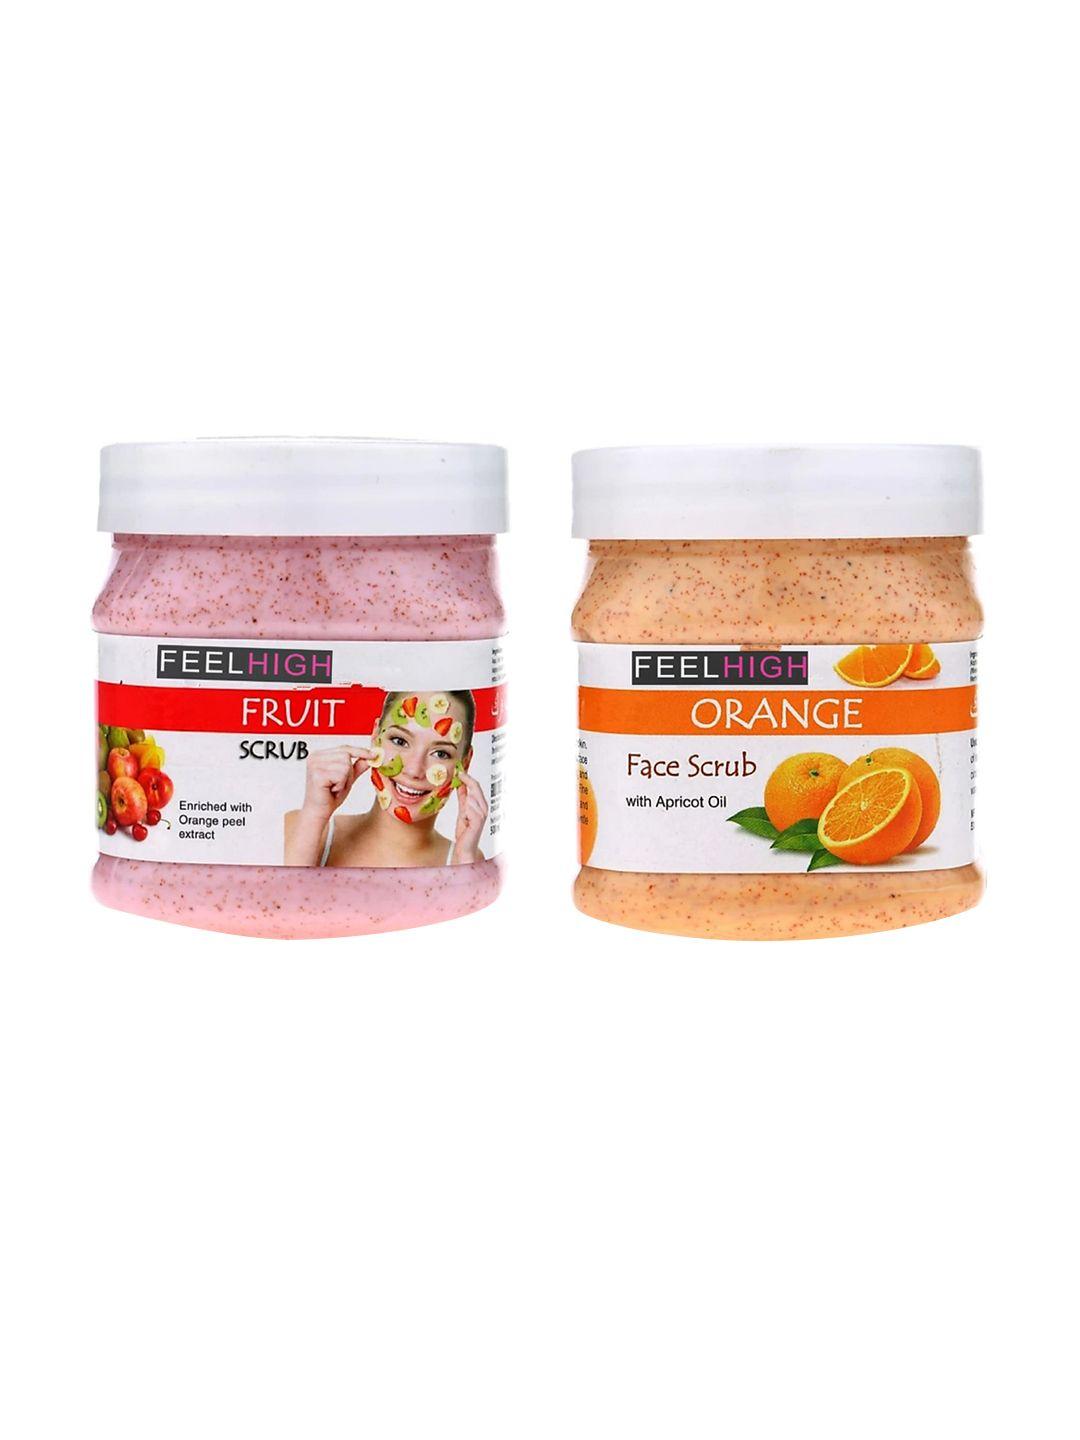 feelhigh-set-of-2-mix-fruit-scrub-&-orange-scrub-for-face-&-body-exfoliators-500-ml-each